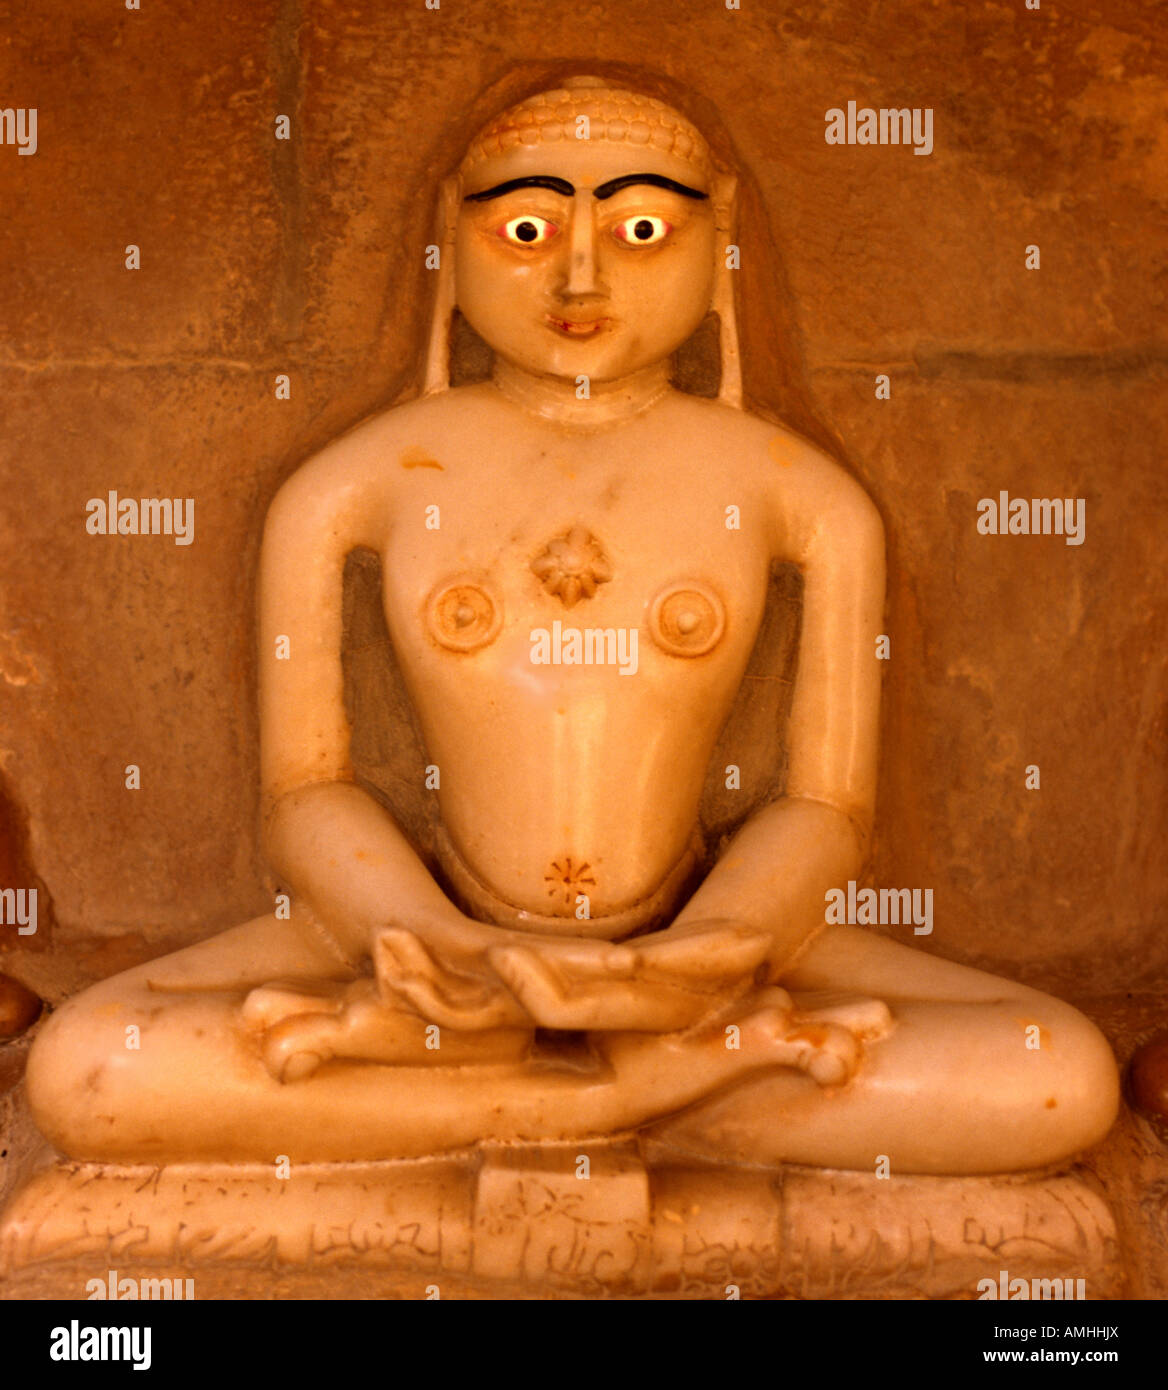 Ranakpur Chaumukha four faced temple 1439 Mahavir - Vardhamāna Mahāvīra 599–527 BC Jain Jainism India Rajasthan Stock Photo